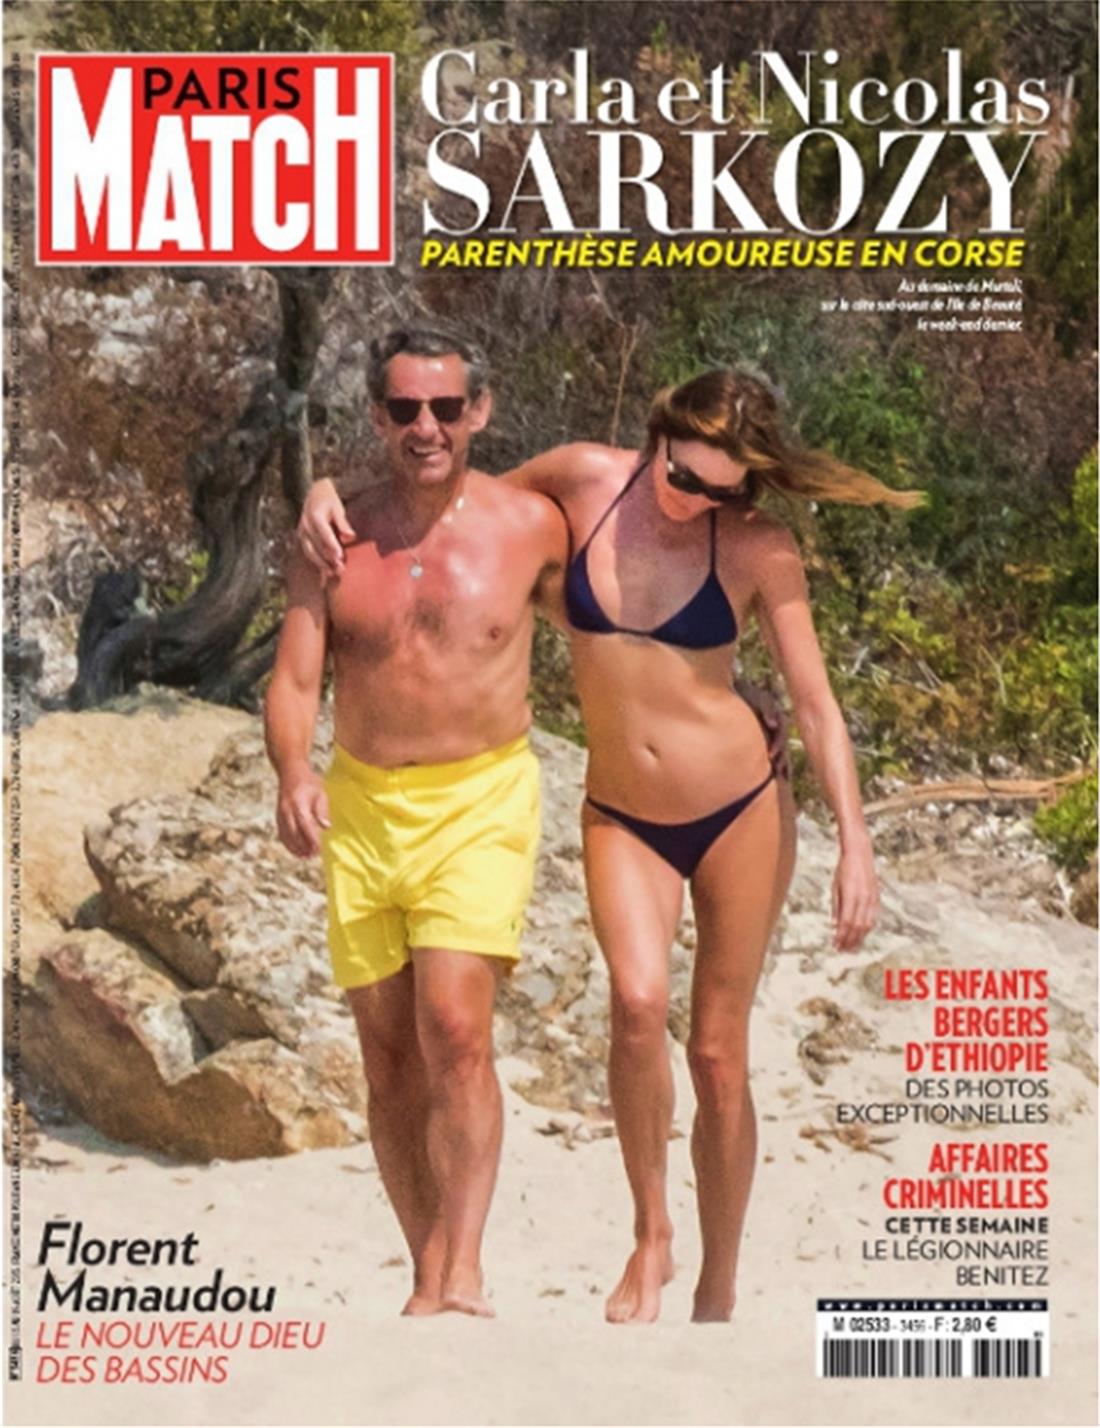 Paris Match - εξώφυλλο - Νικολά Σαρκοζί